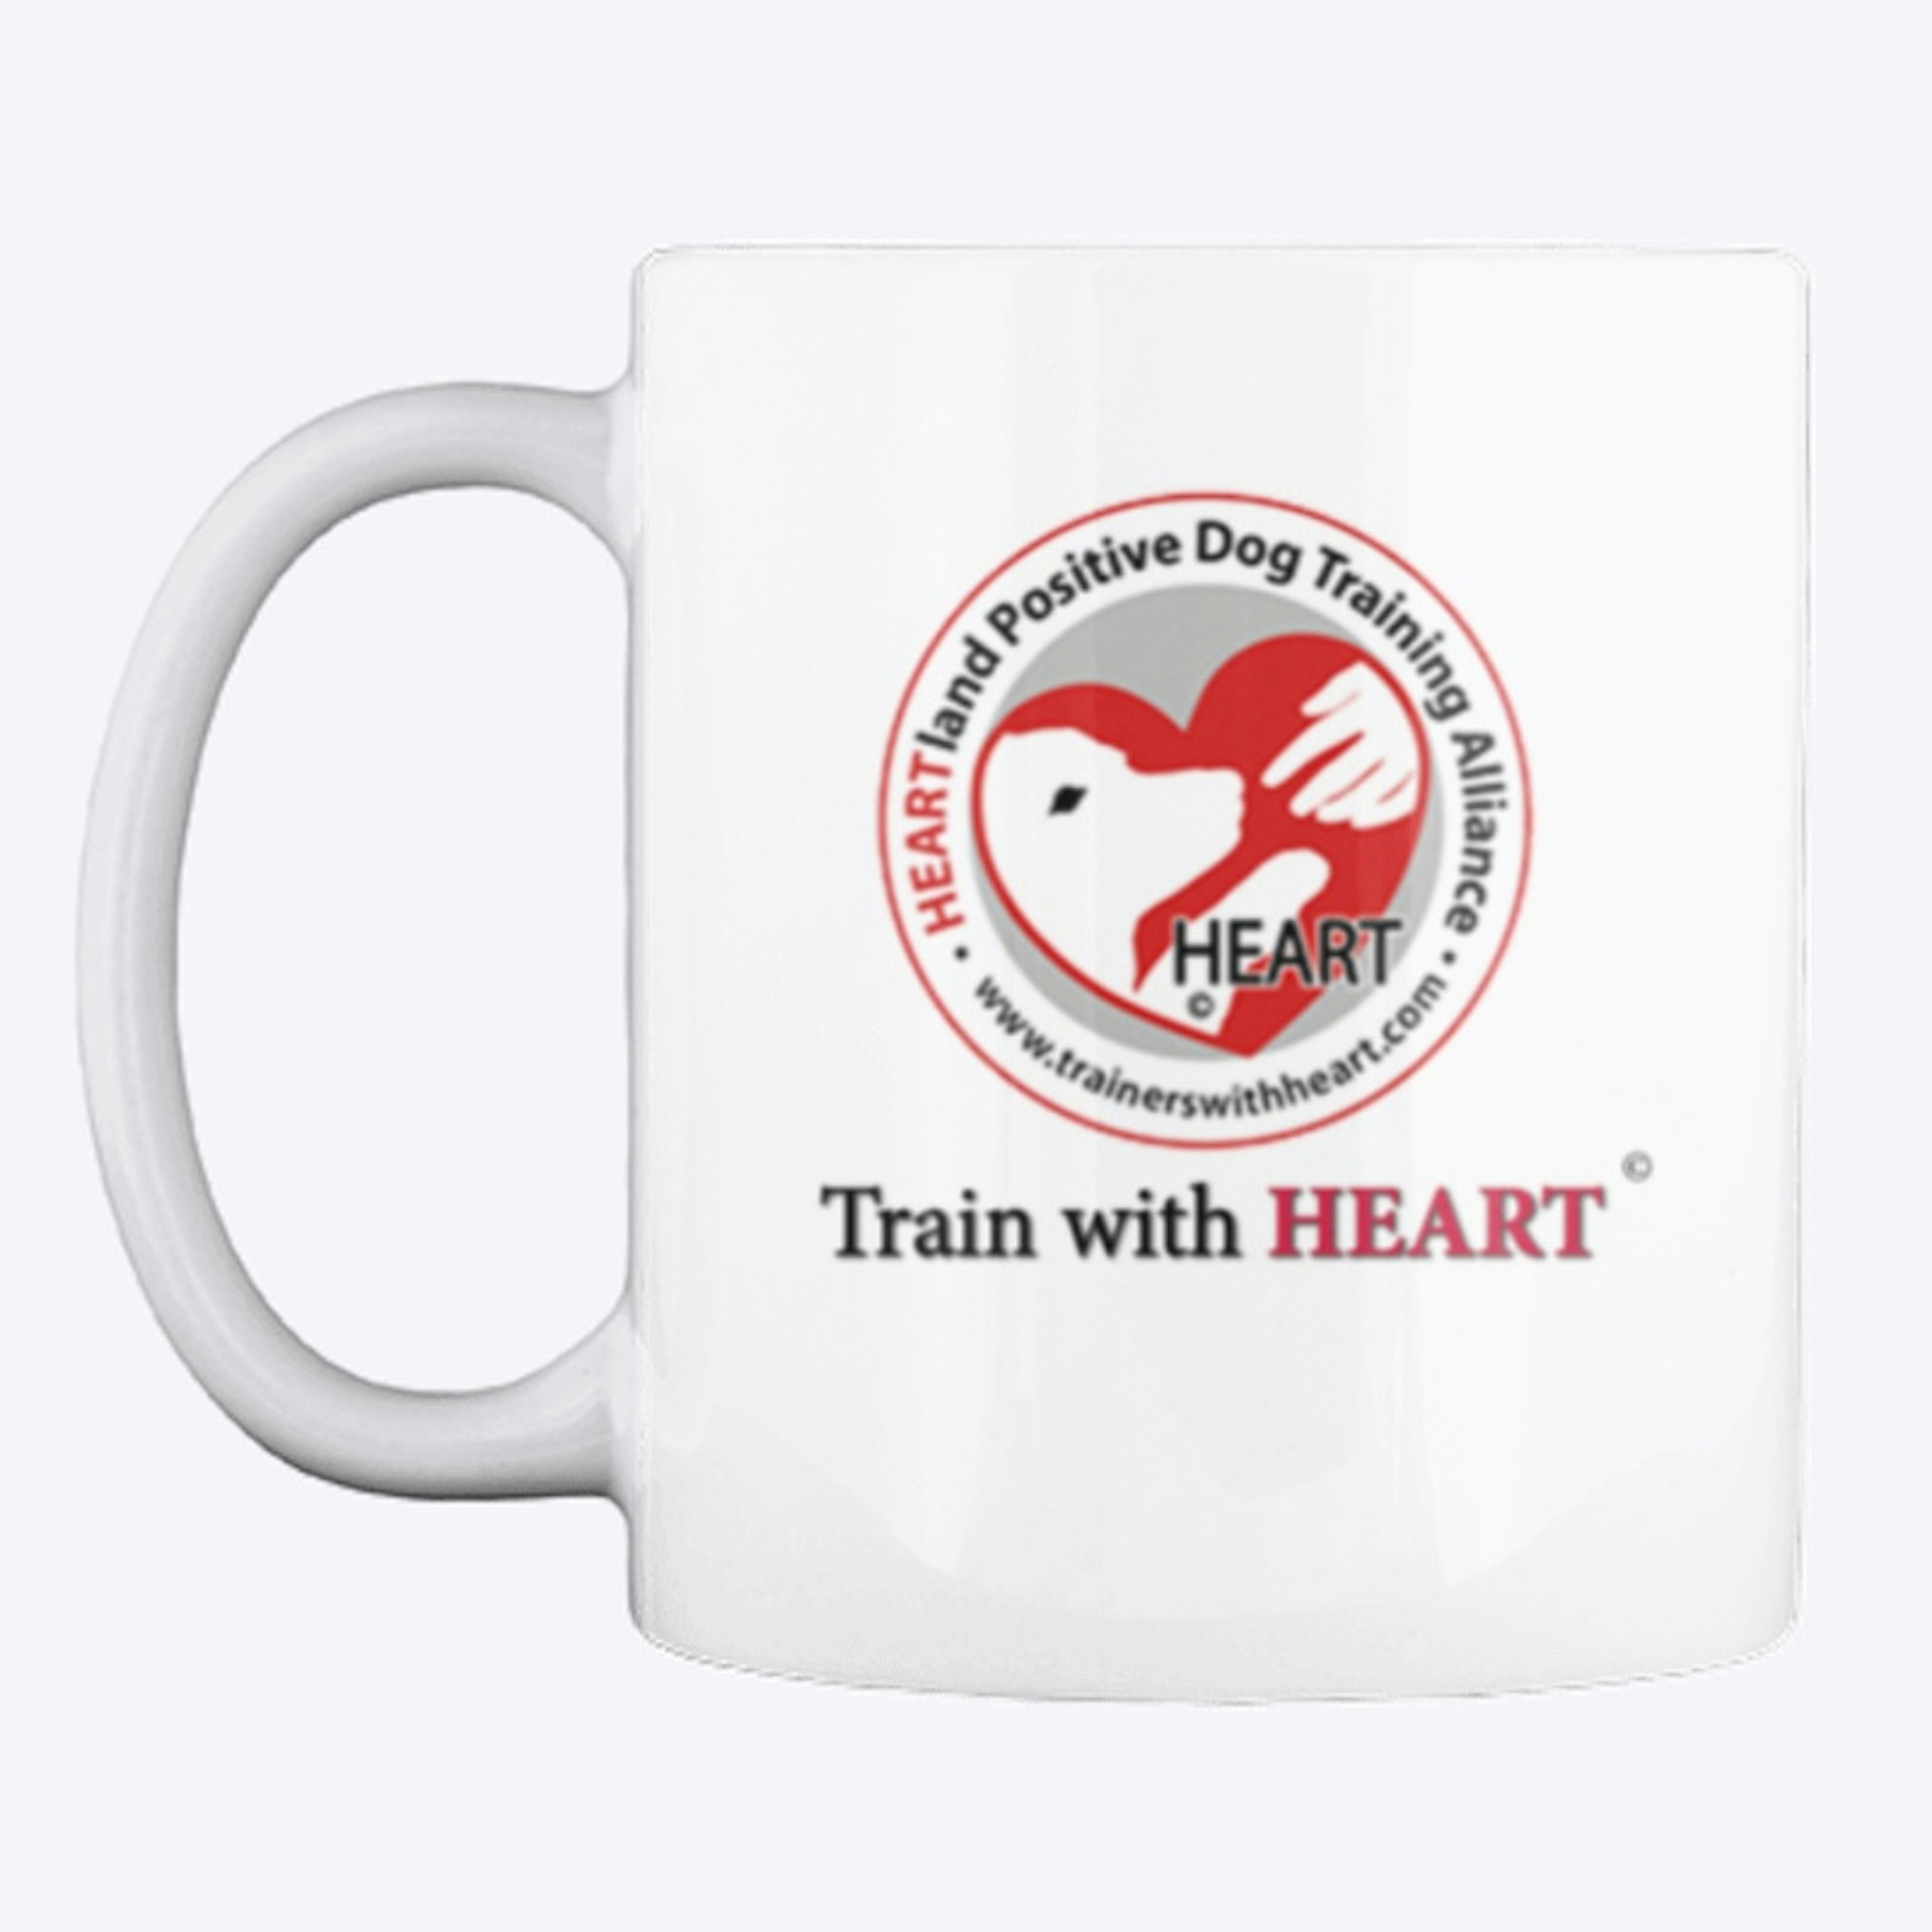 HEARTland Positive Dog Training Alliance